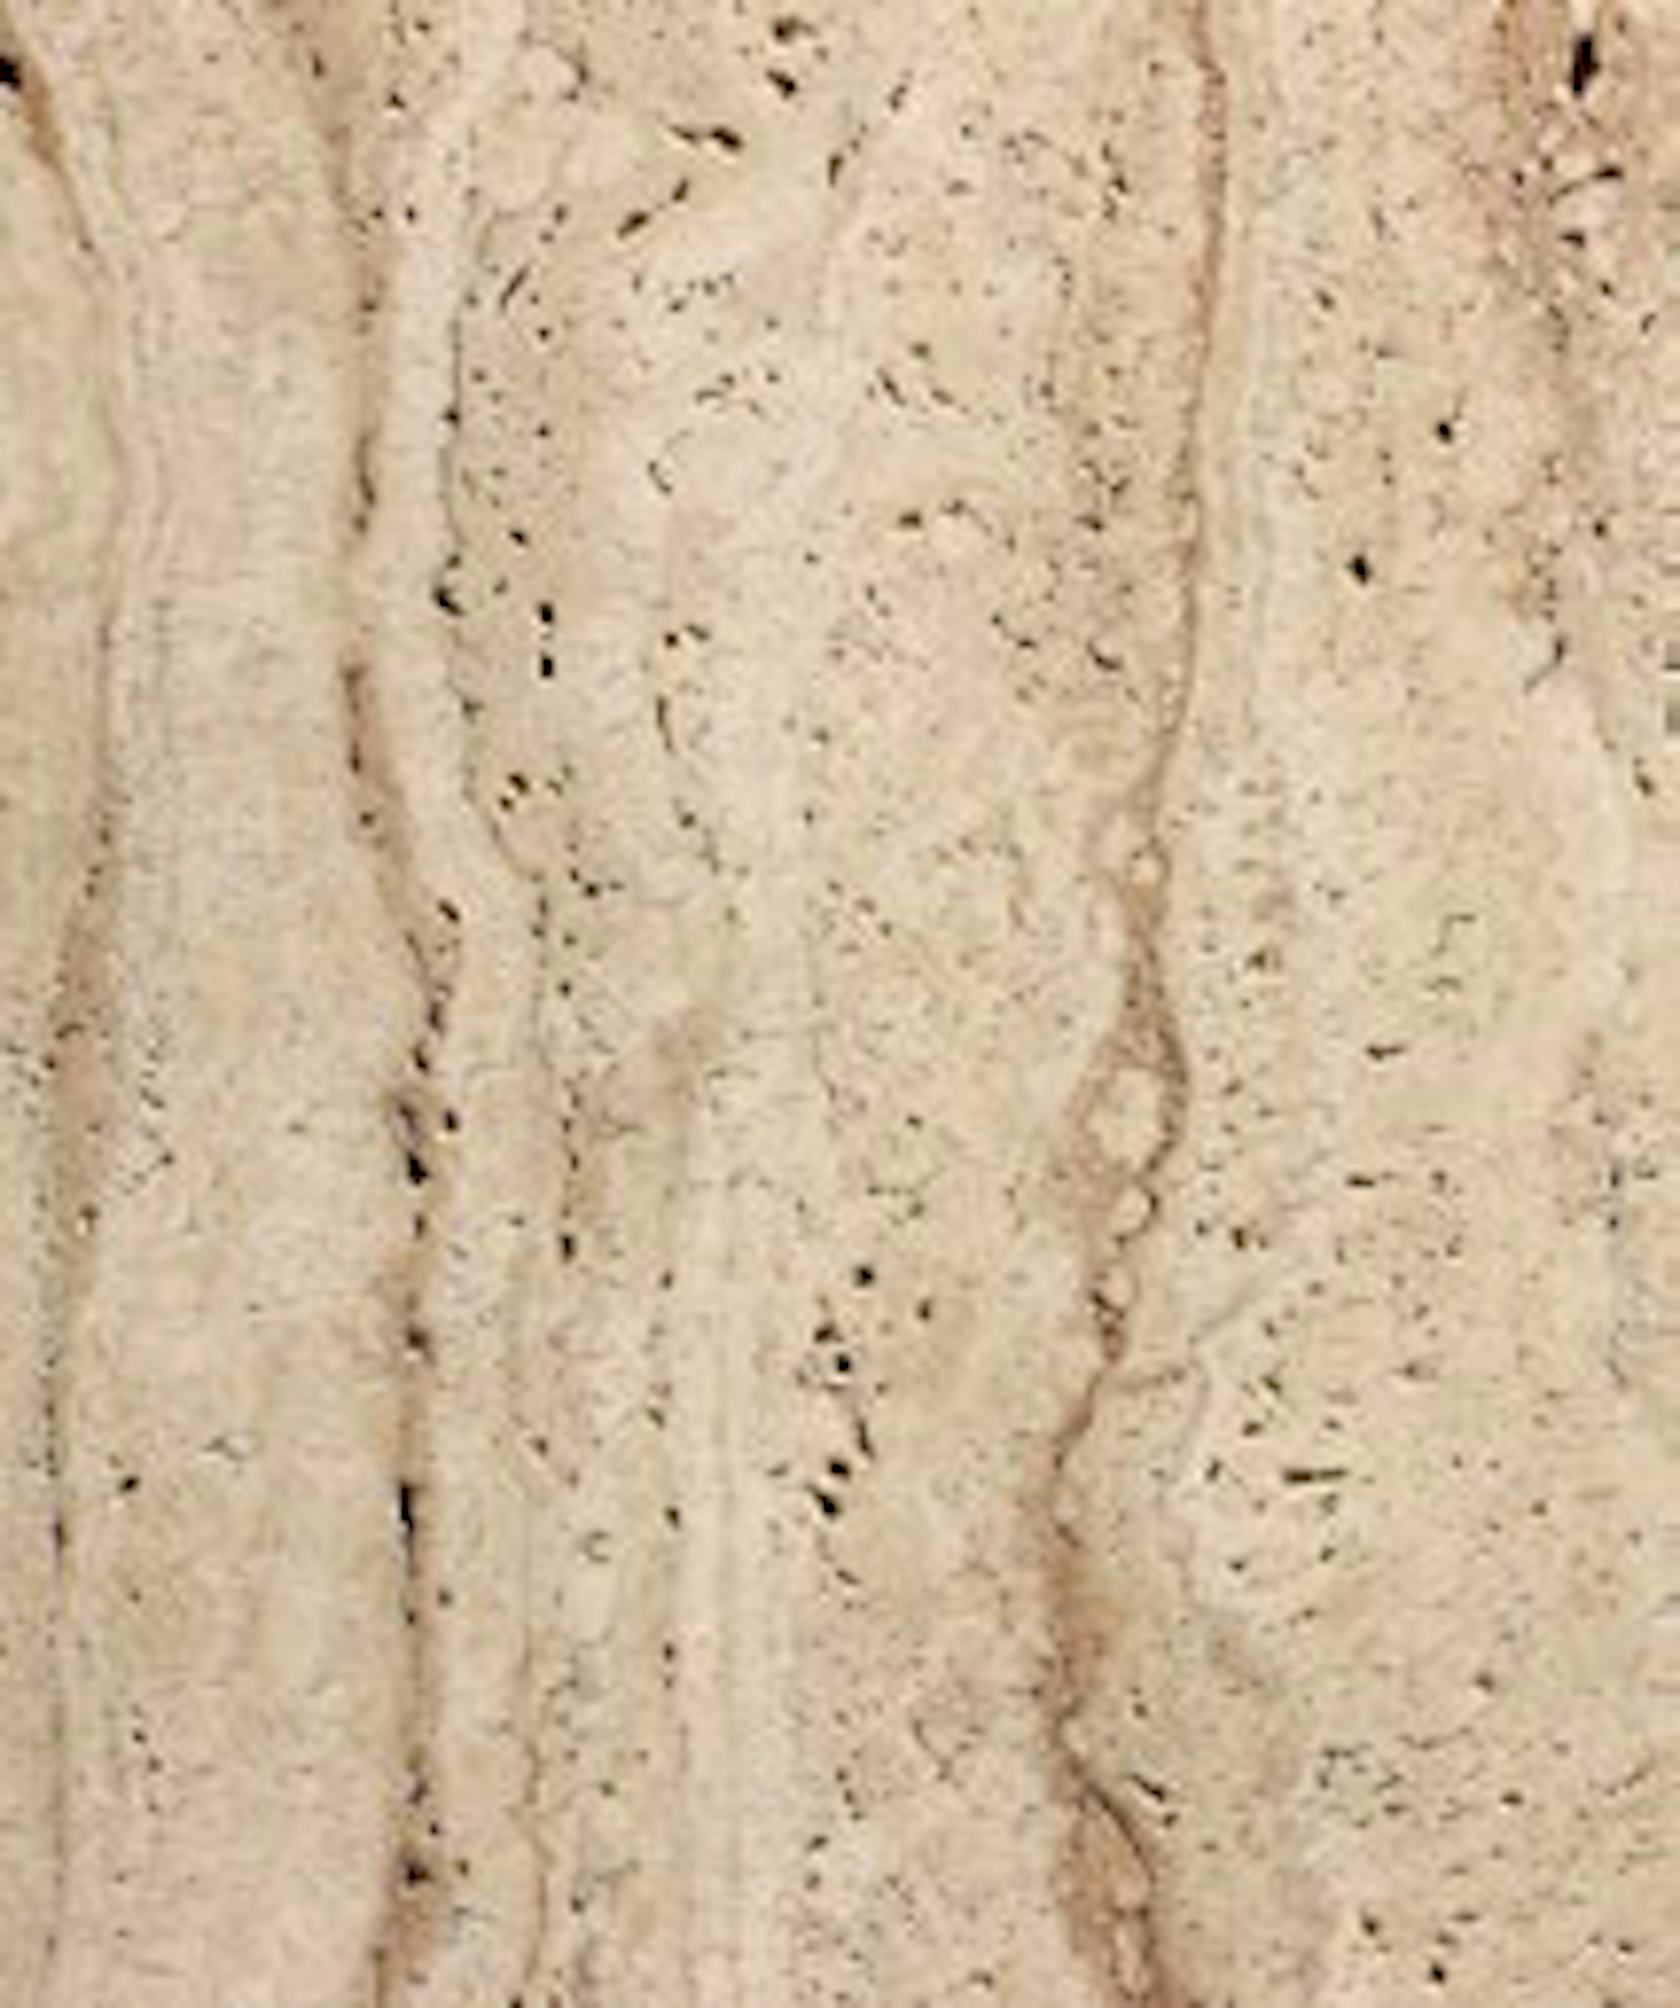 rock soil texture wood outdoors nature